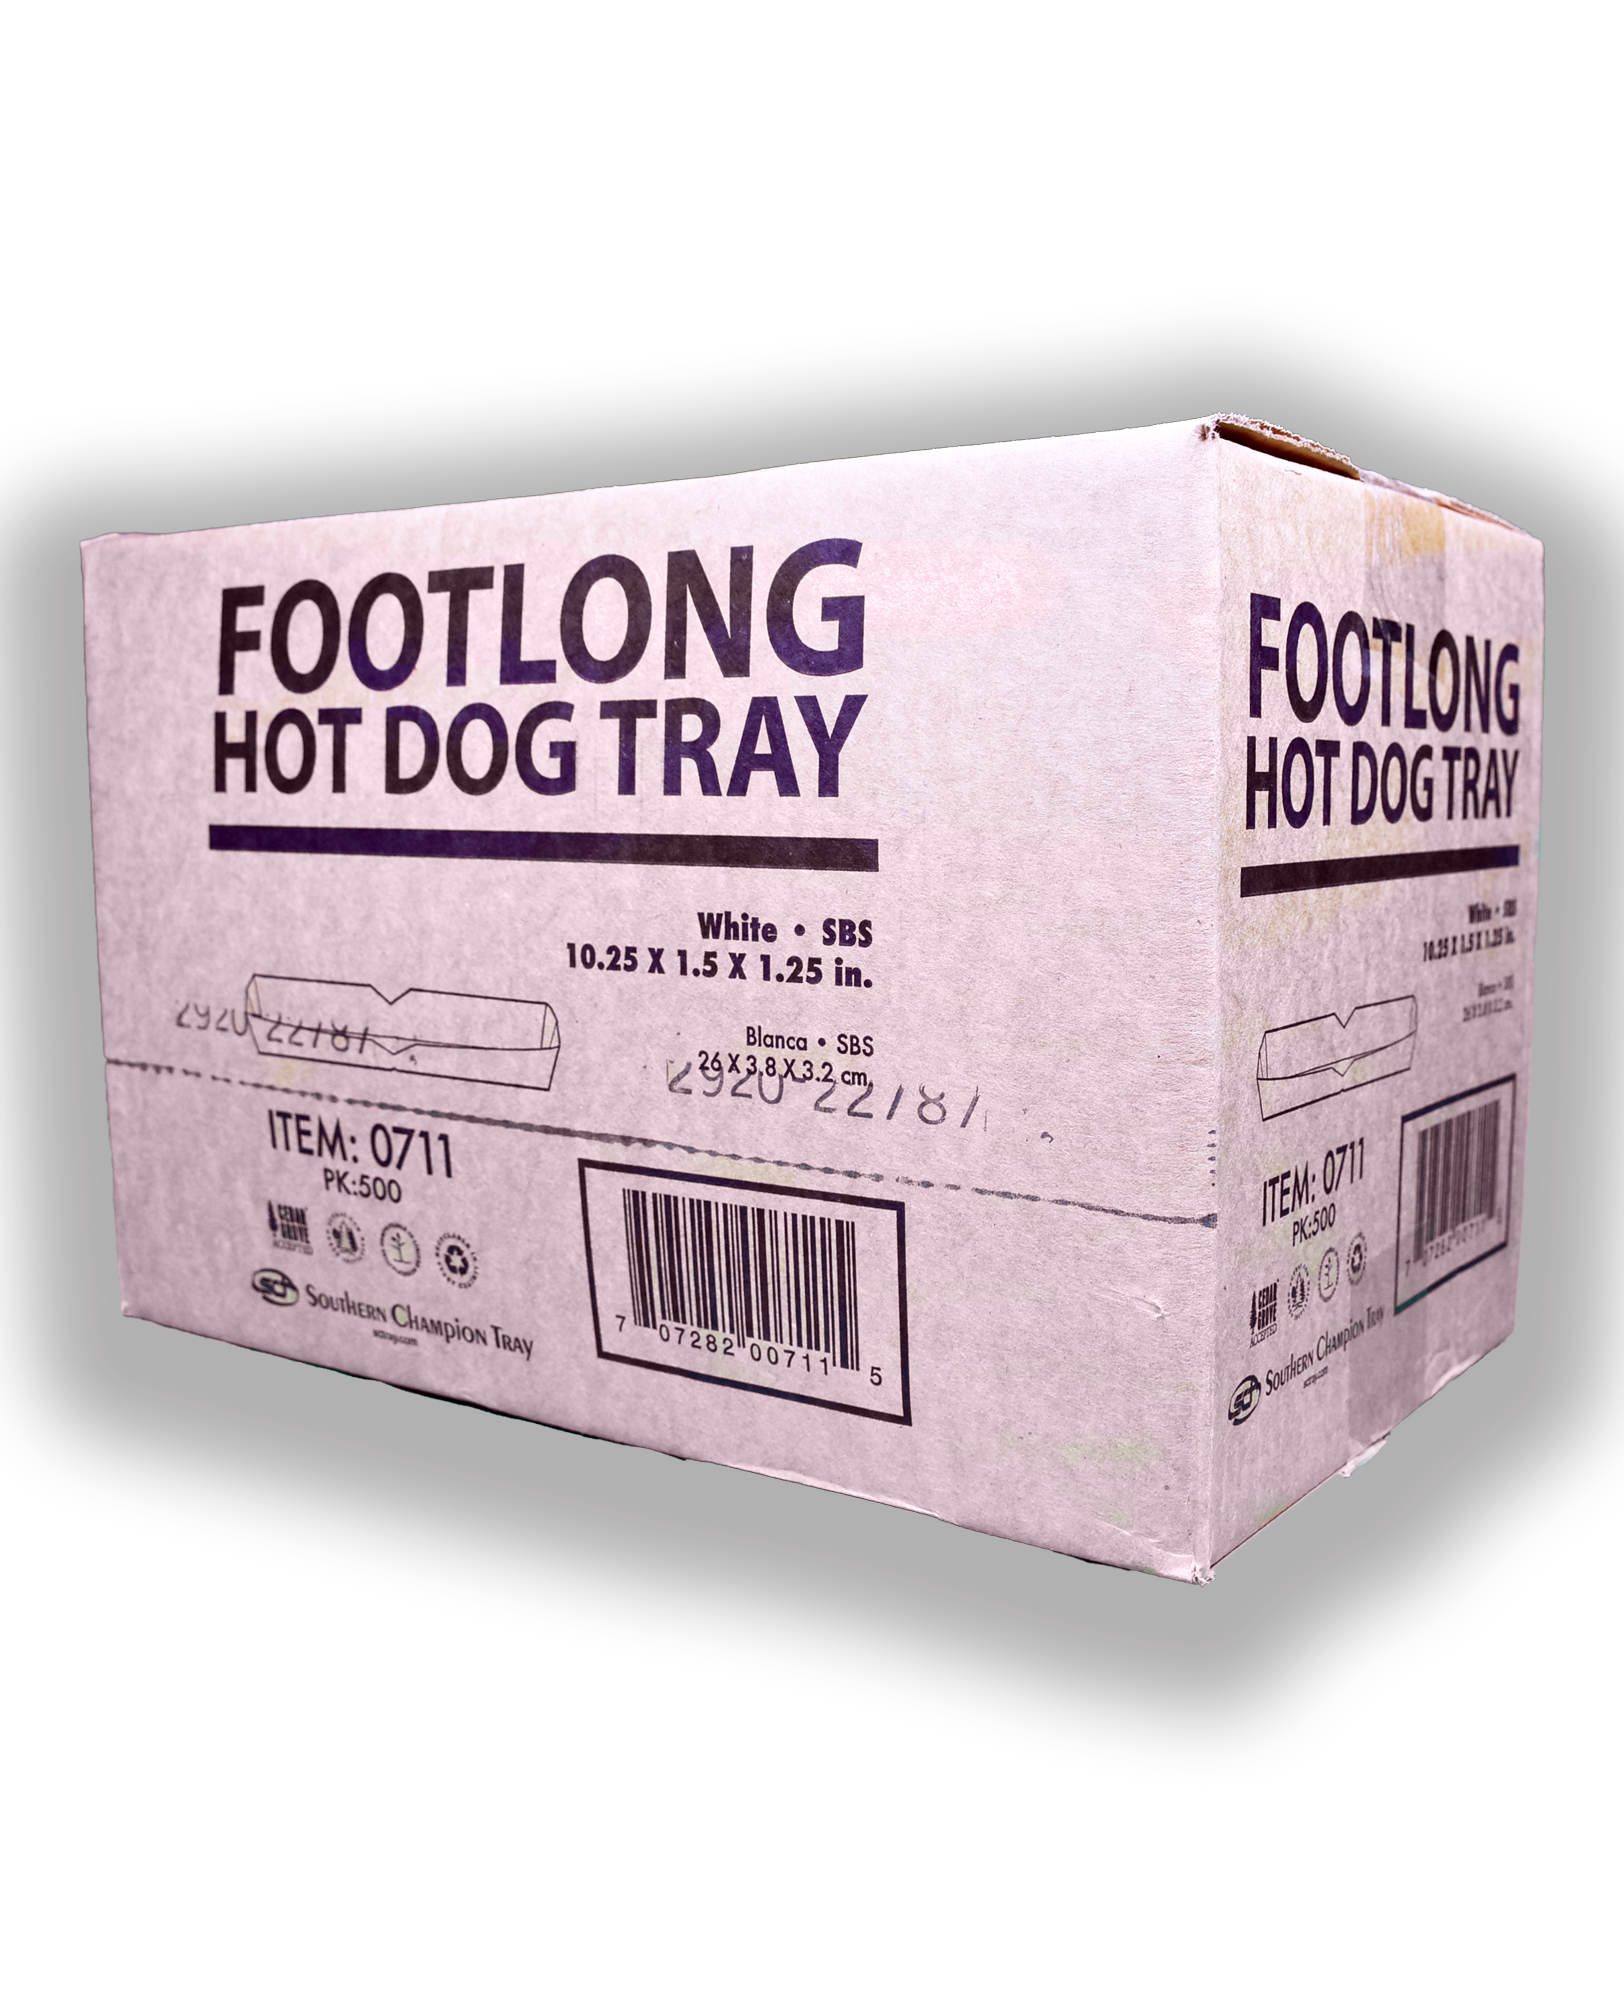 HOT DOG TRAY 711 RG/FLONG PERF